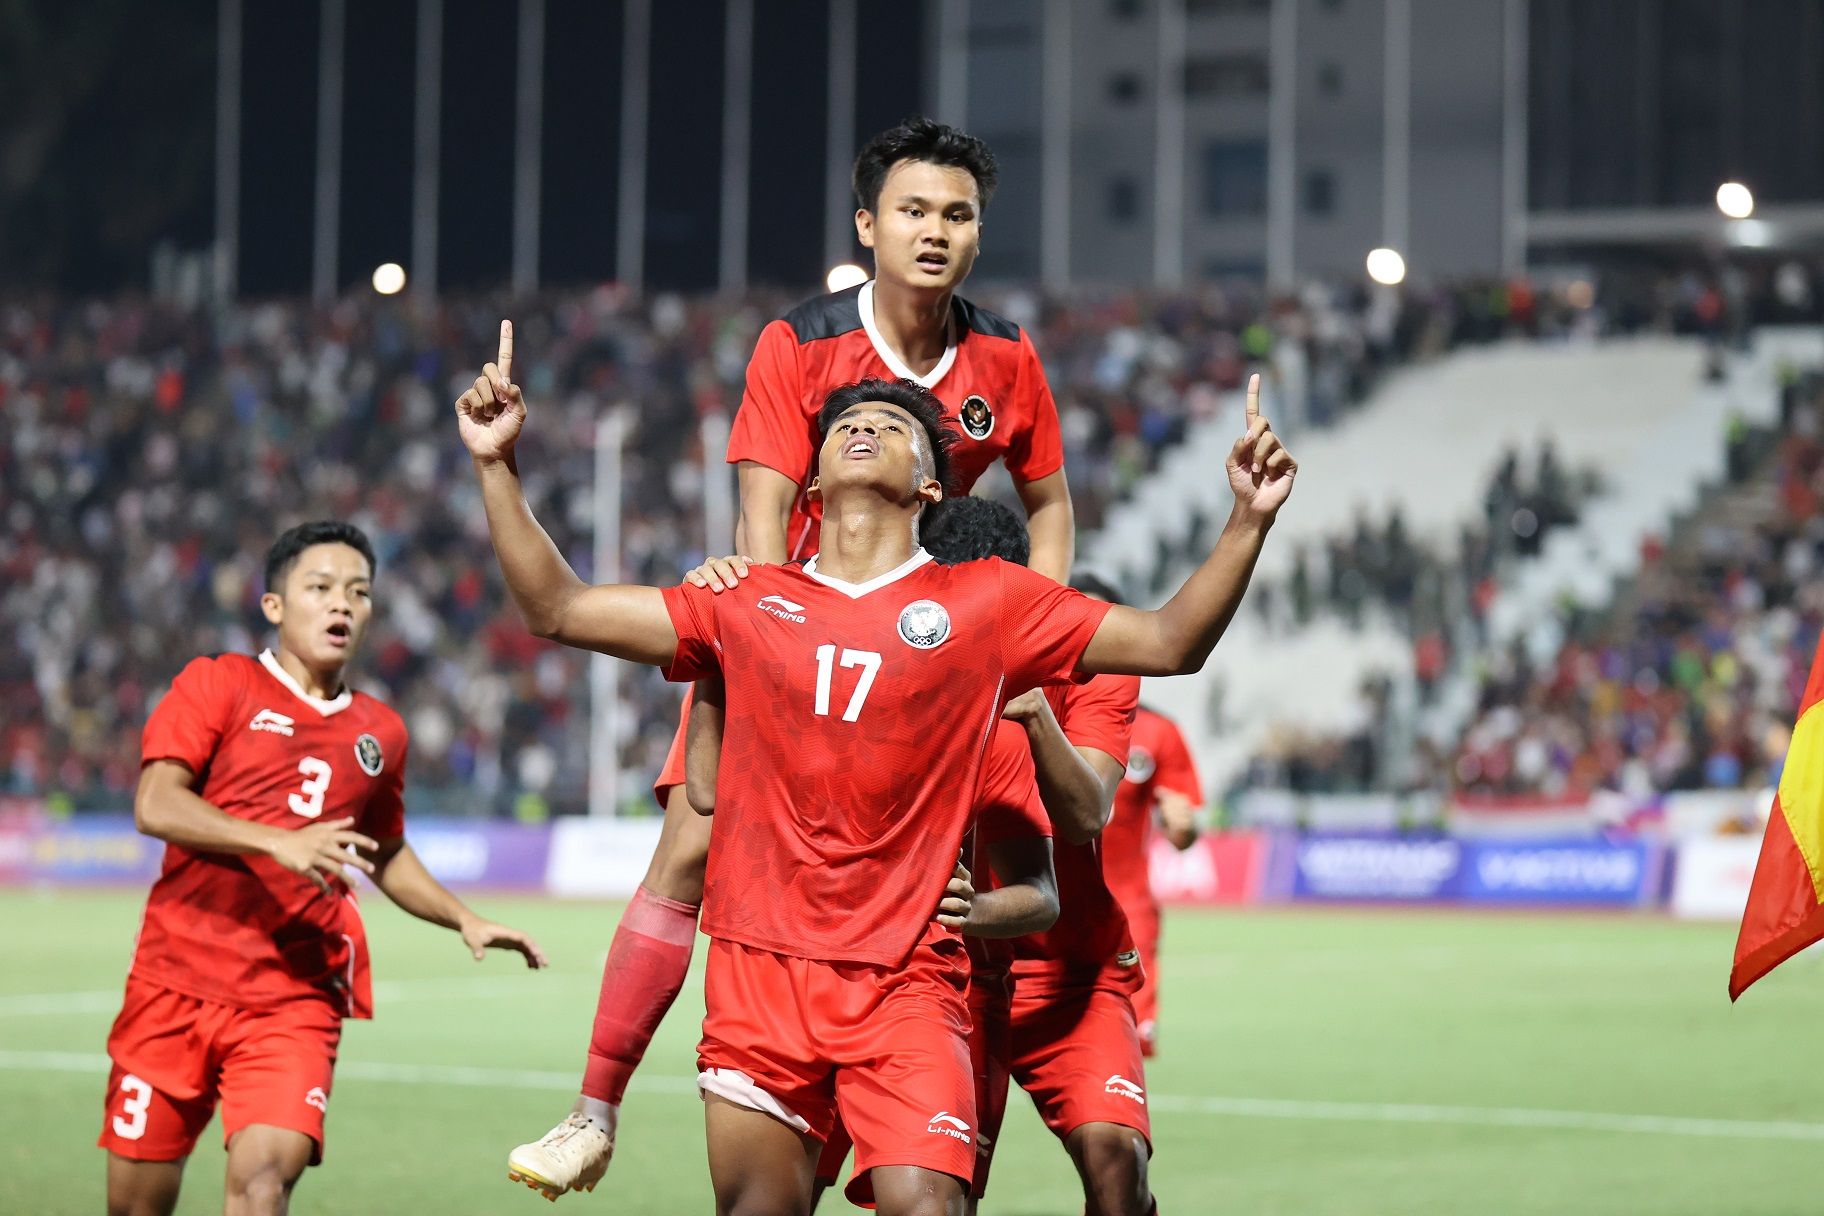 Striker Timnas Indonesia U-22, Irfan Jauhari, merayakan gol ke gawang Thailand dalam final cabang sepak bola SEA Games 2023 di Kamboja, Selasa 16 Mei 2023.